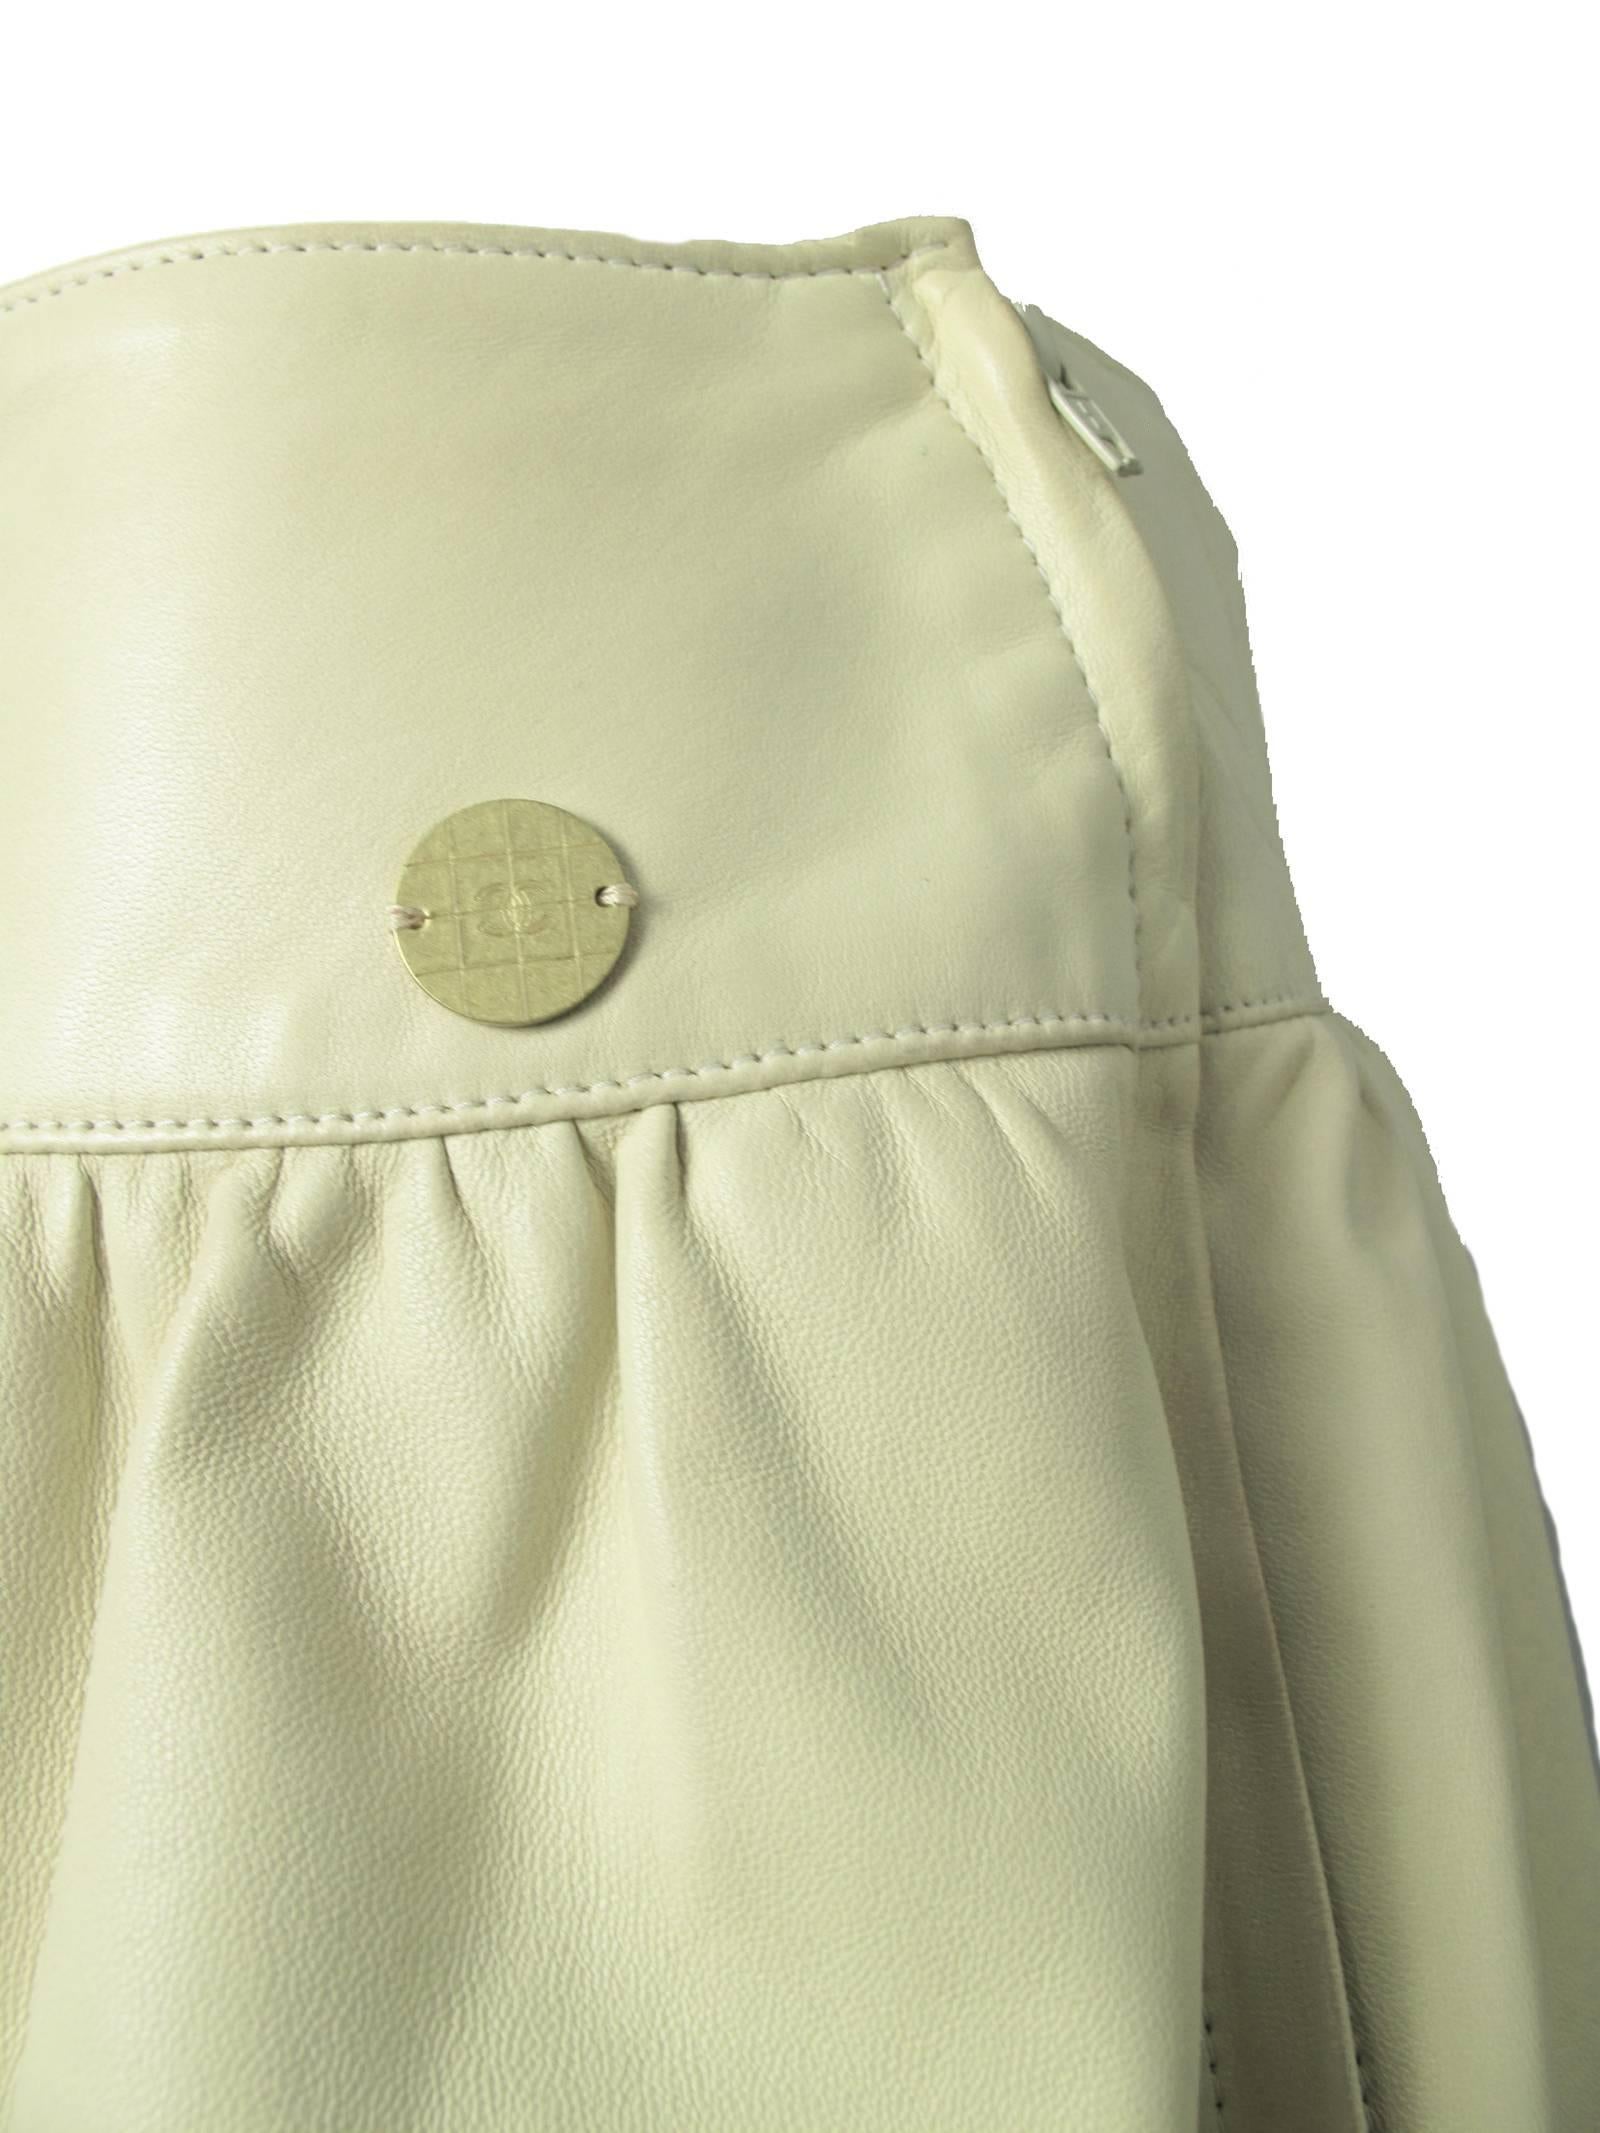 Beige Chanel Cream Soft Leather Skirt - sale